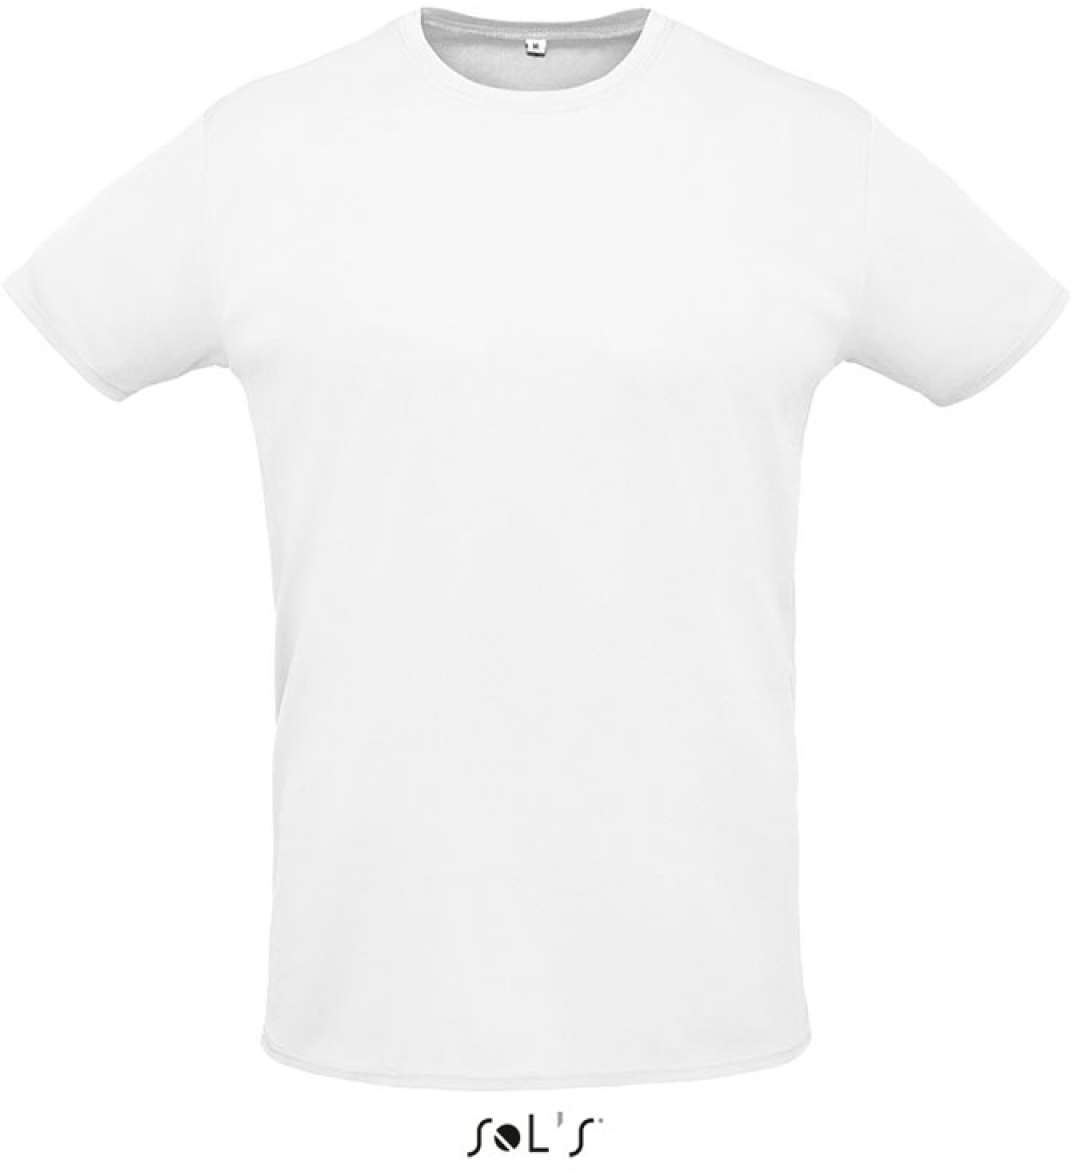 Sol's Sprint - Unisex Sport T-shirt - Sol's Sprint - Unisex Sport T-shirt - White